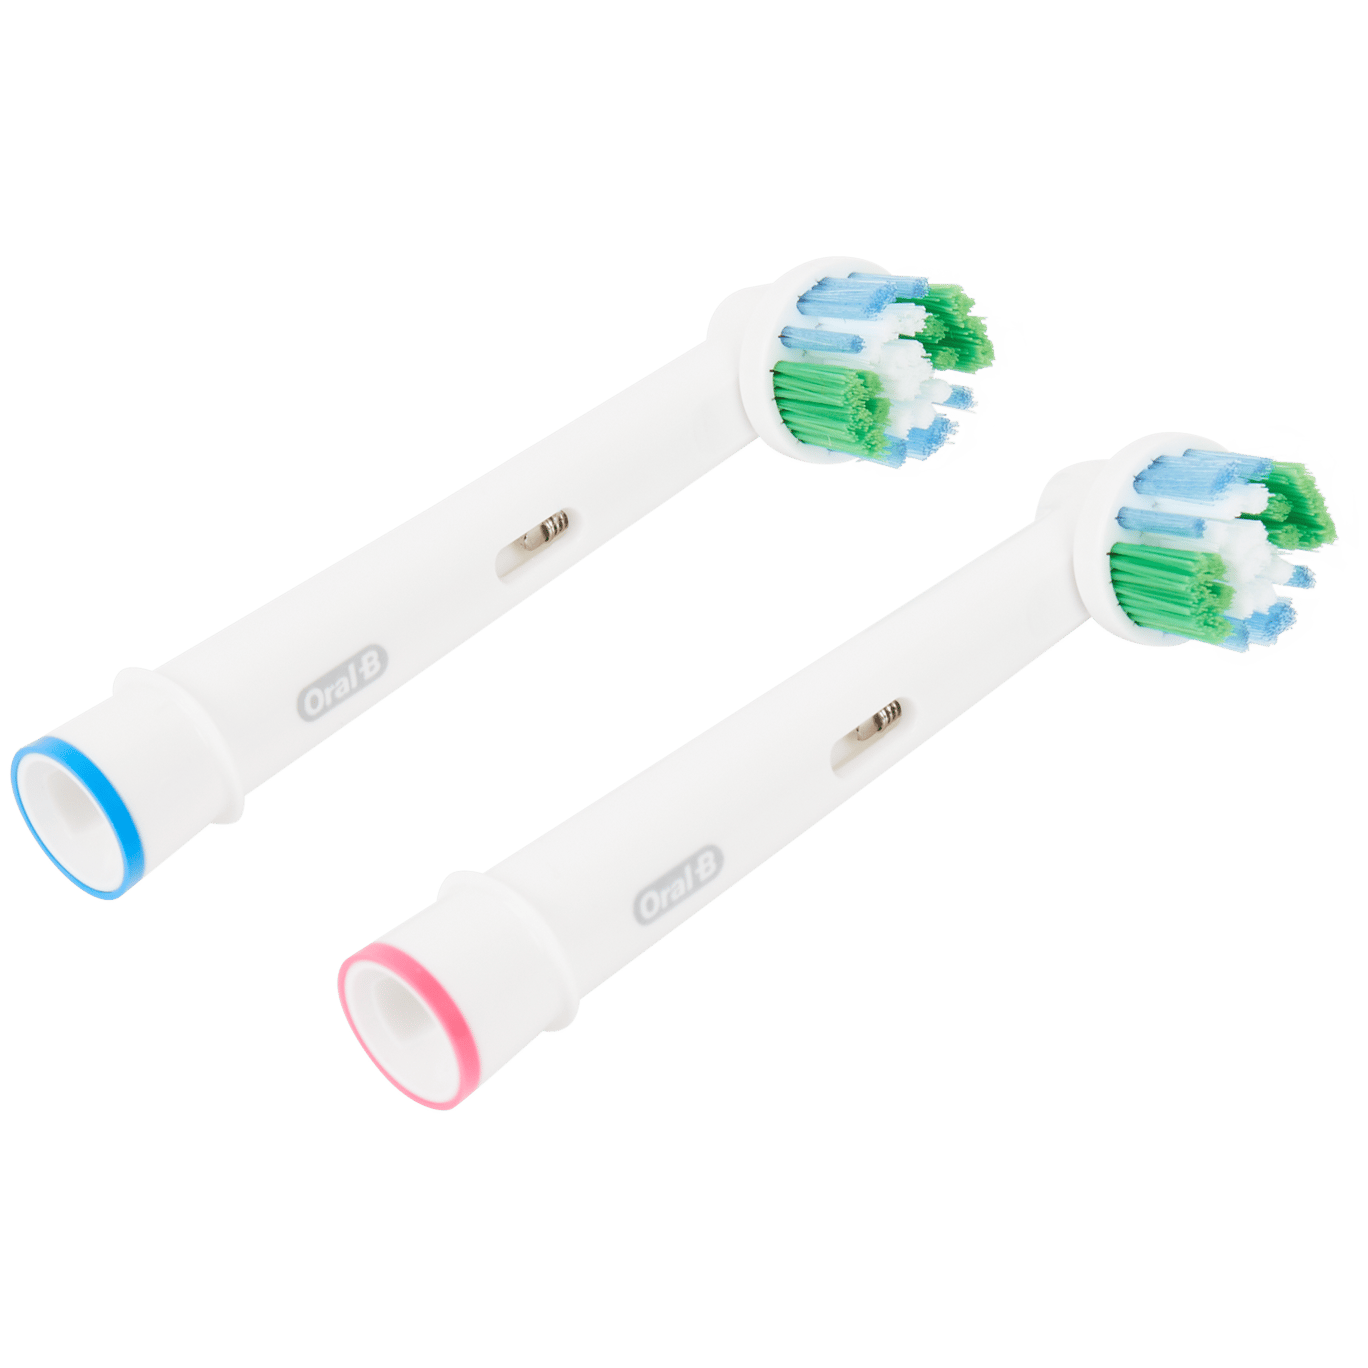 Oral-B Precision Clean opzetborstels Clean Maximiser